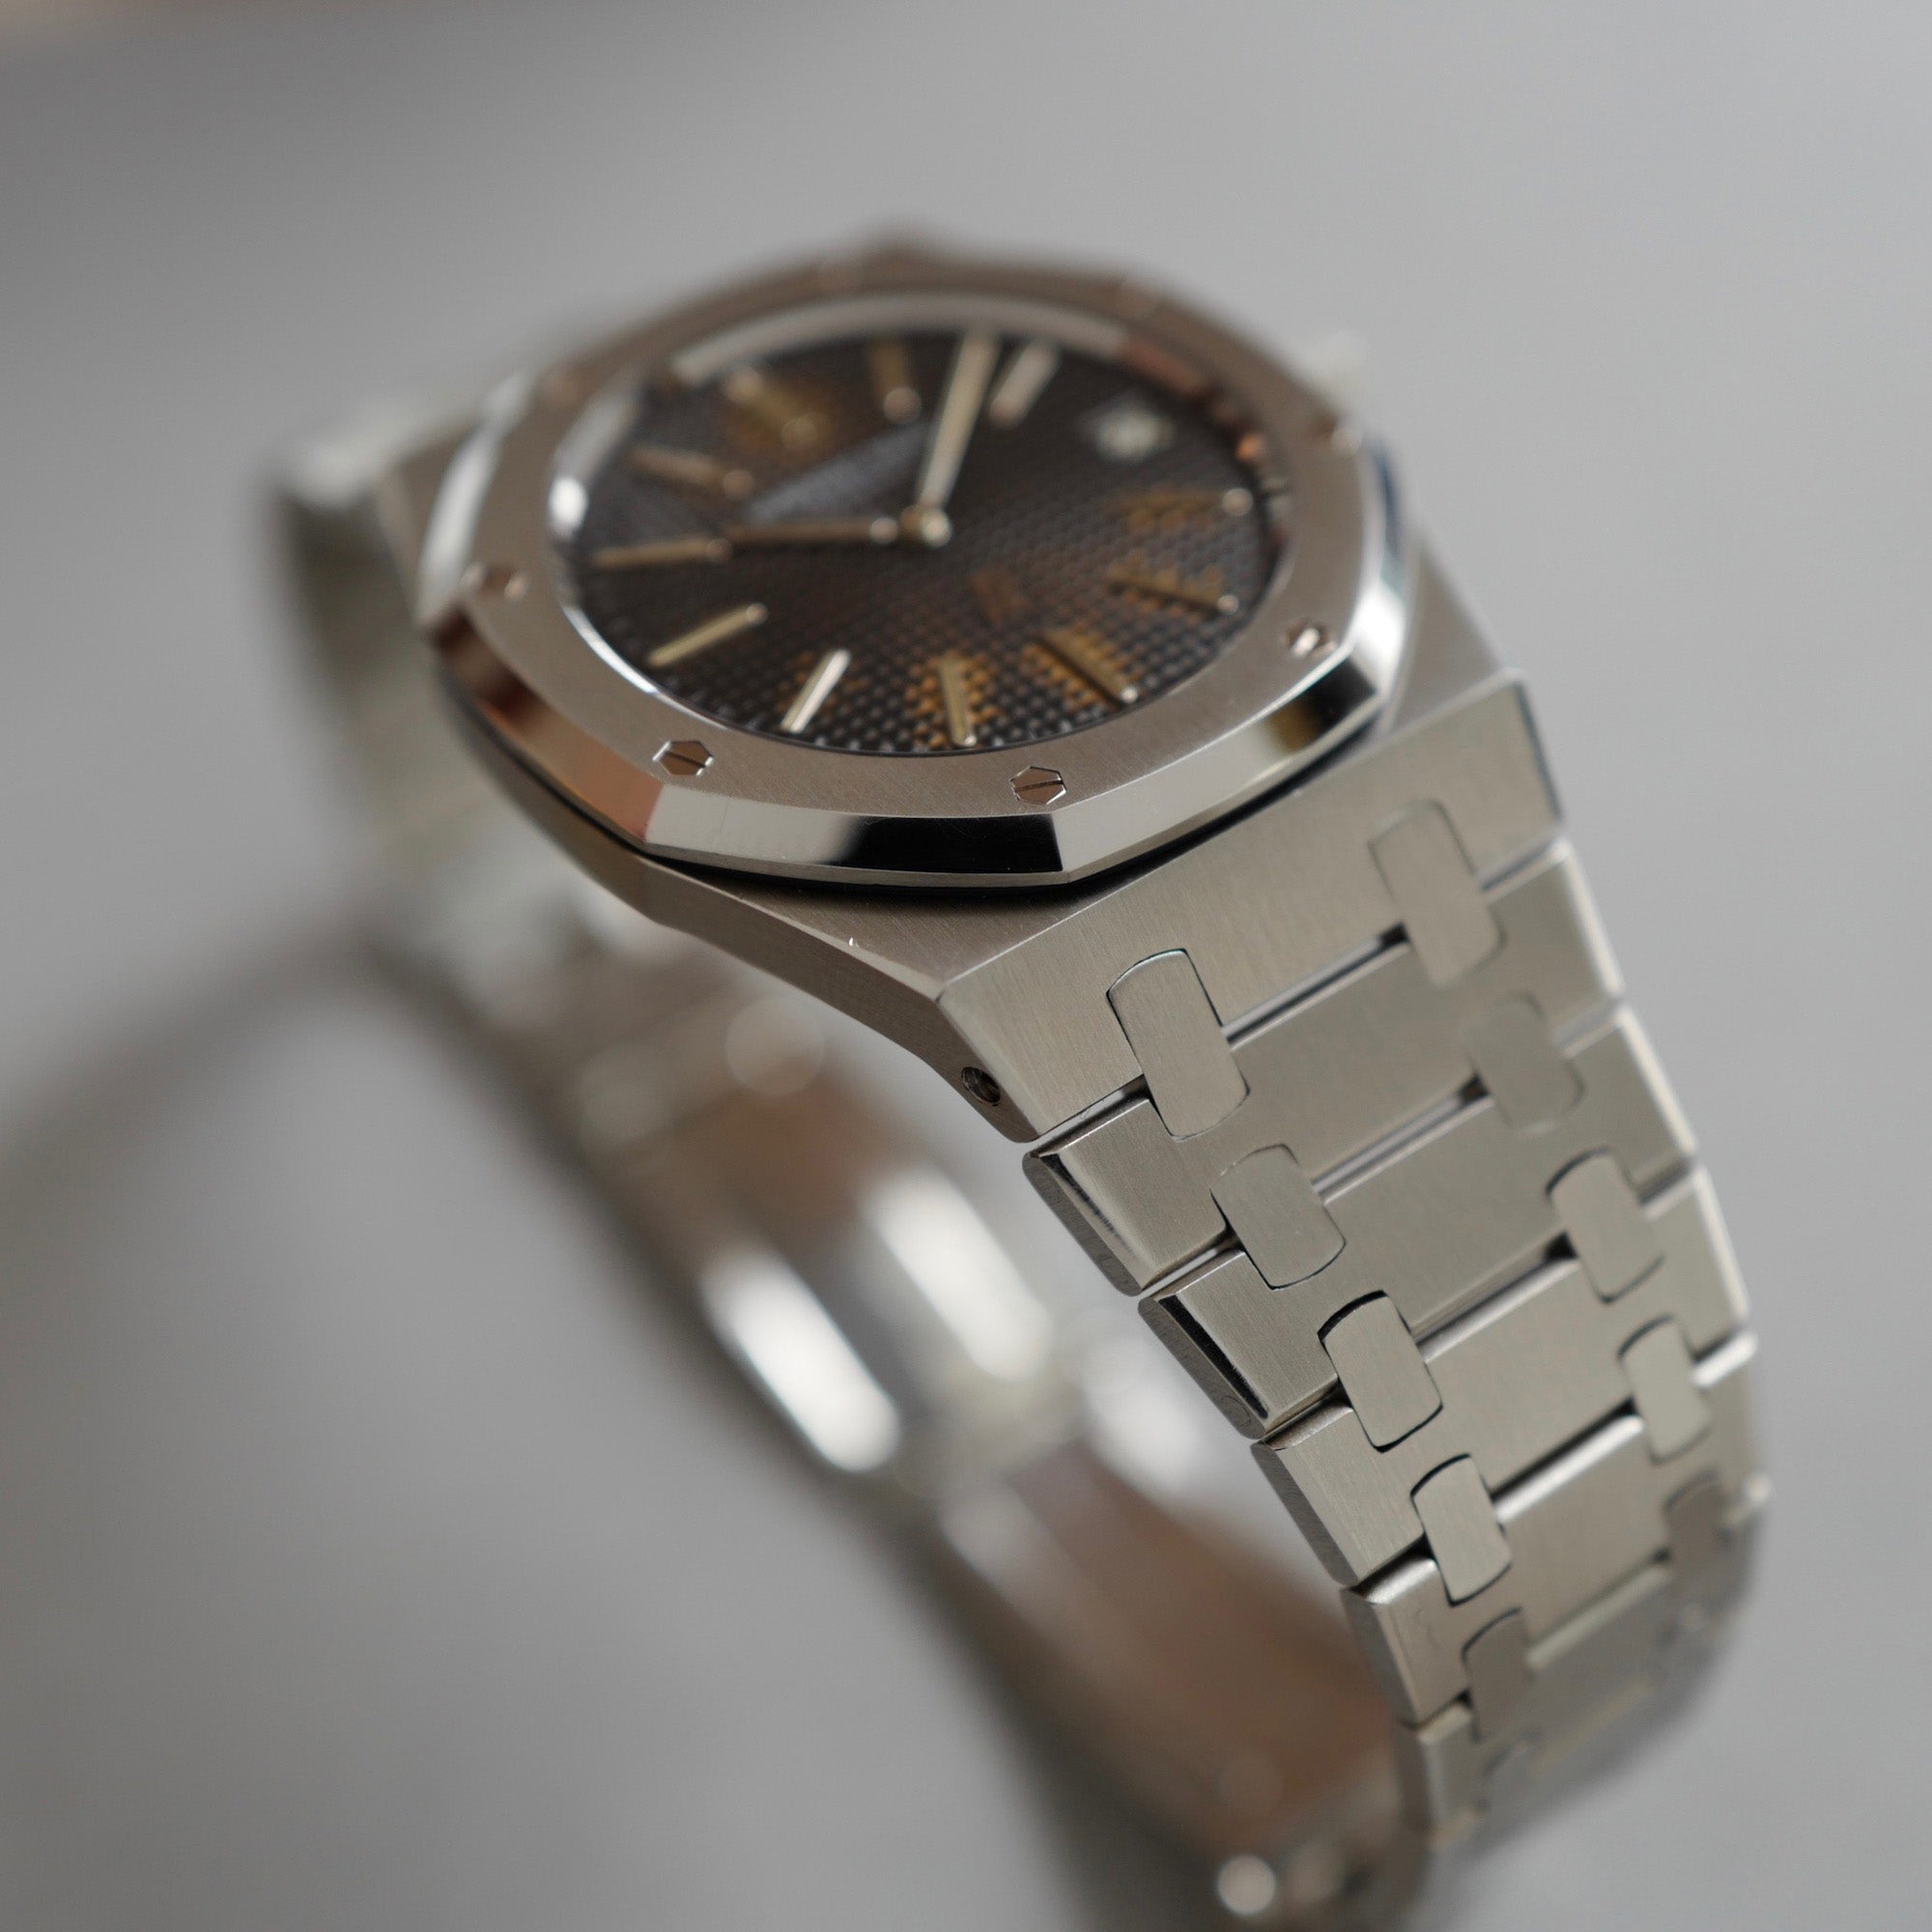 Audemars Piguet - Audemars Piguet B-Series Royal Oak Jumbo Watch Ref. 5402 in Exceptional Condition - The Keystone Watches